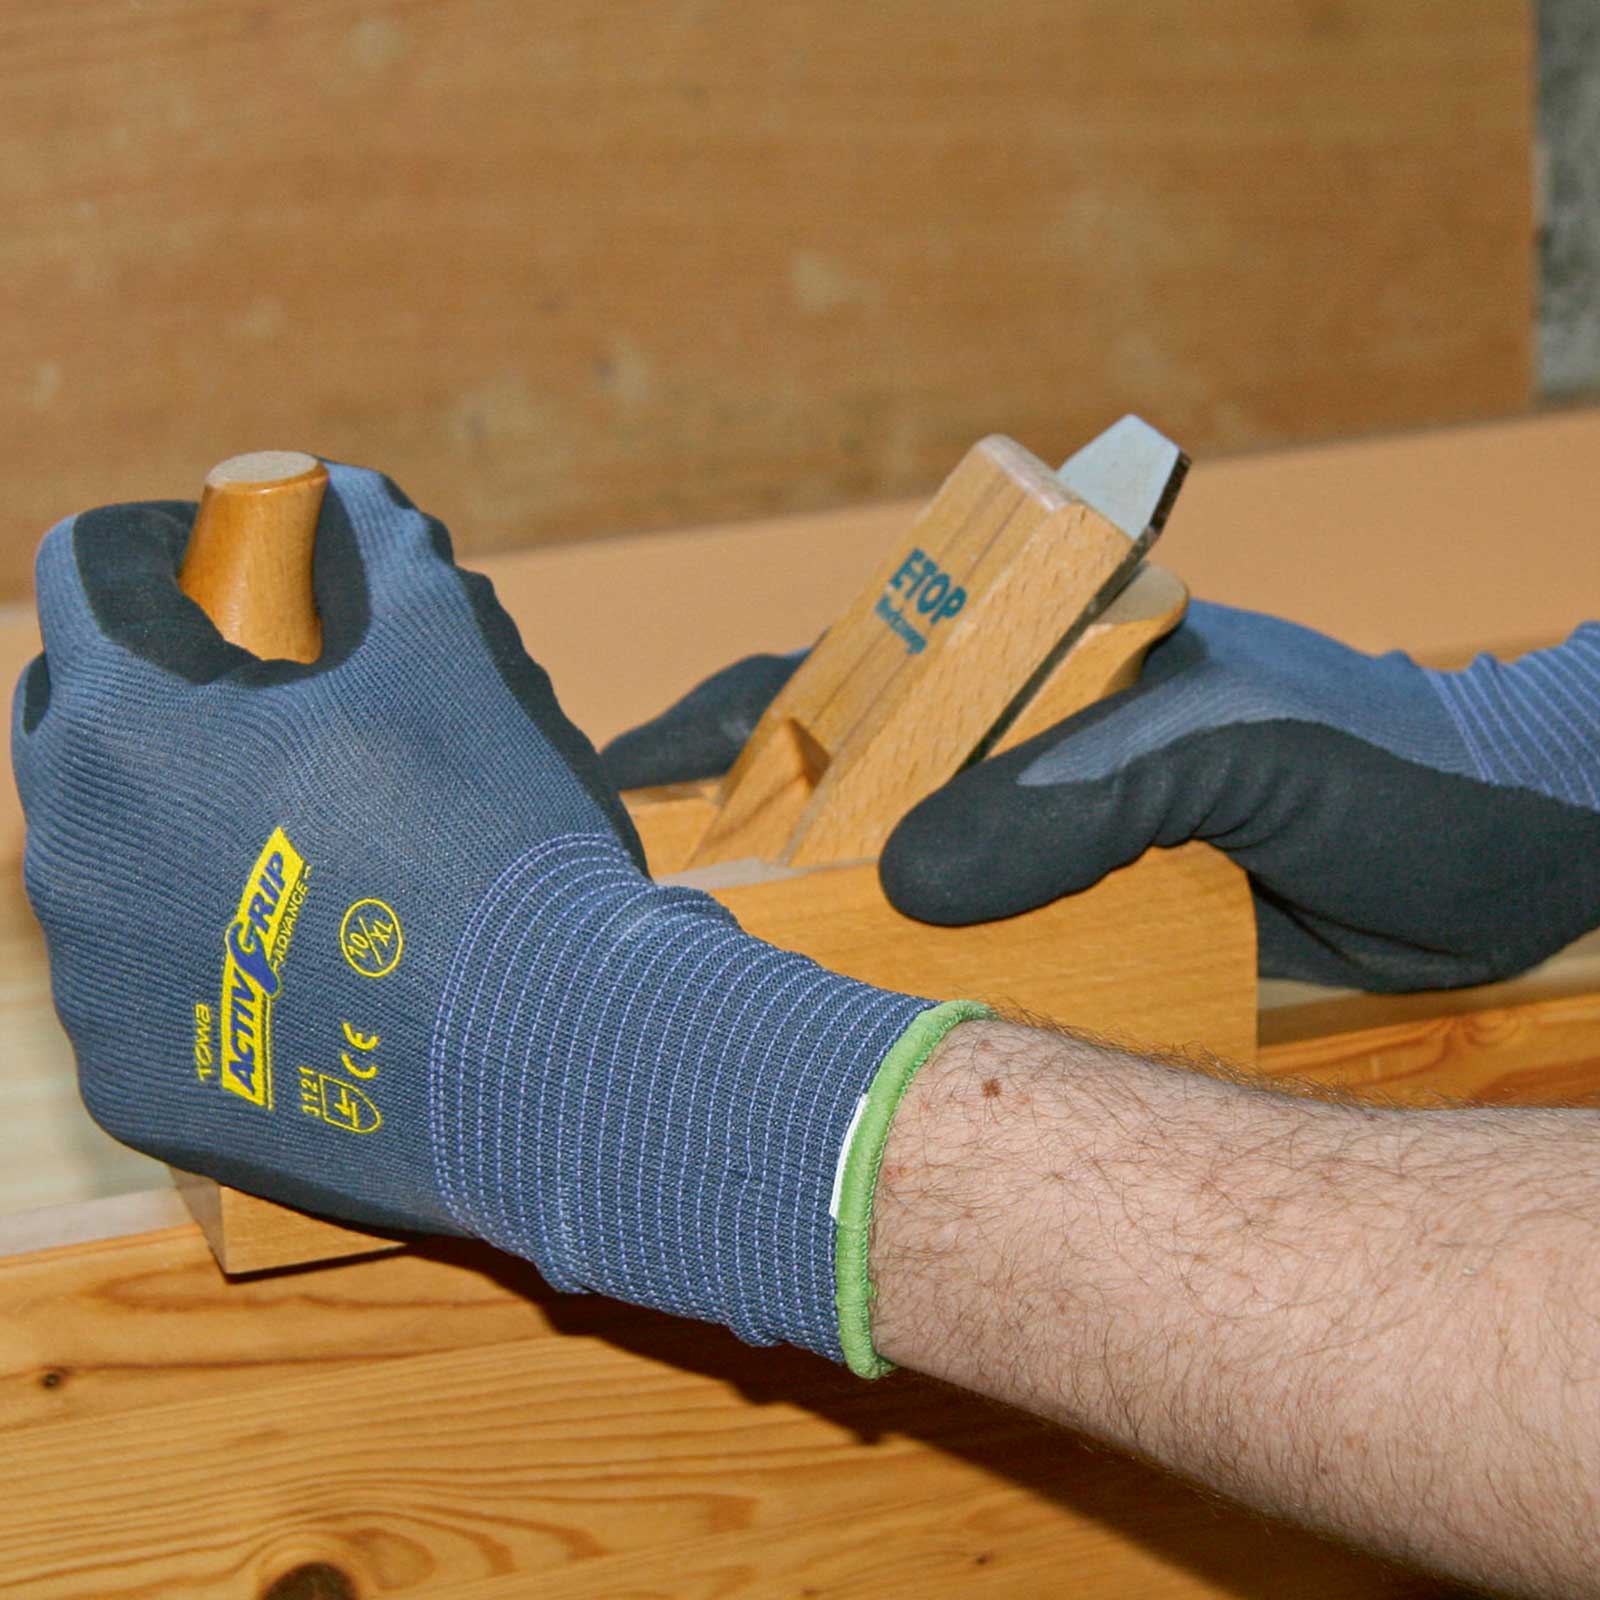 Fine-knit Glove Activ Grip Advance 8